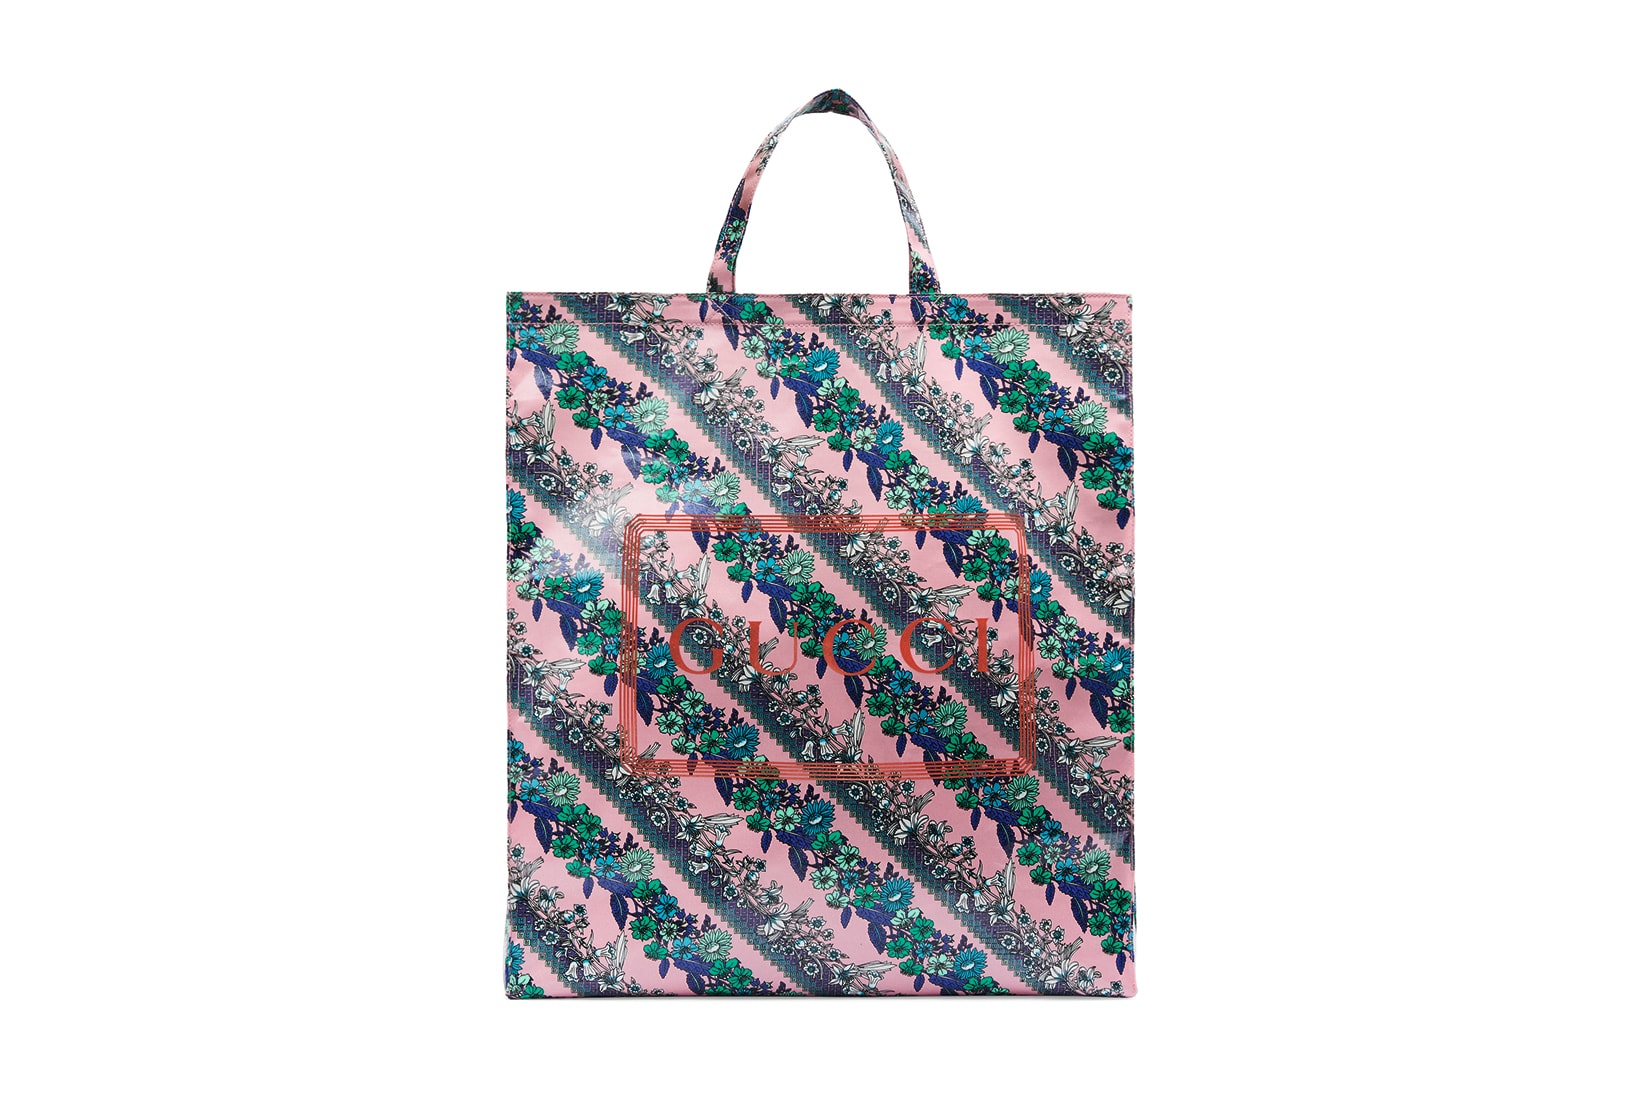 Gucci Shopper Tote Bags Floral Check Patterns Black Pink Logo